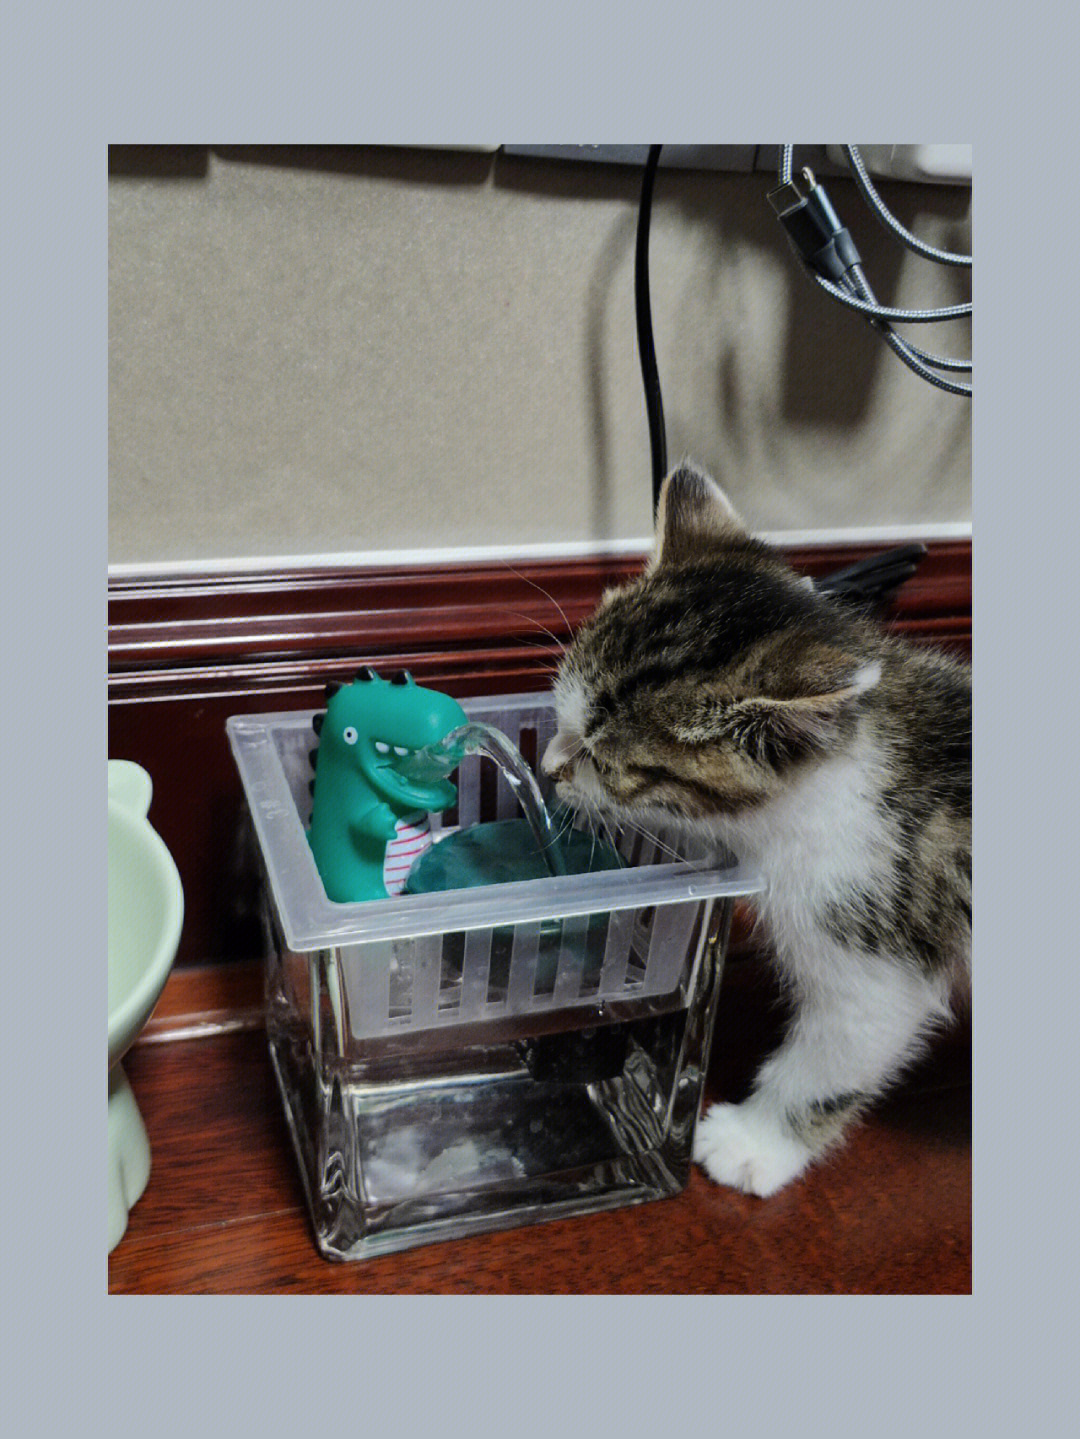 自制猫咪饮水机